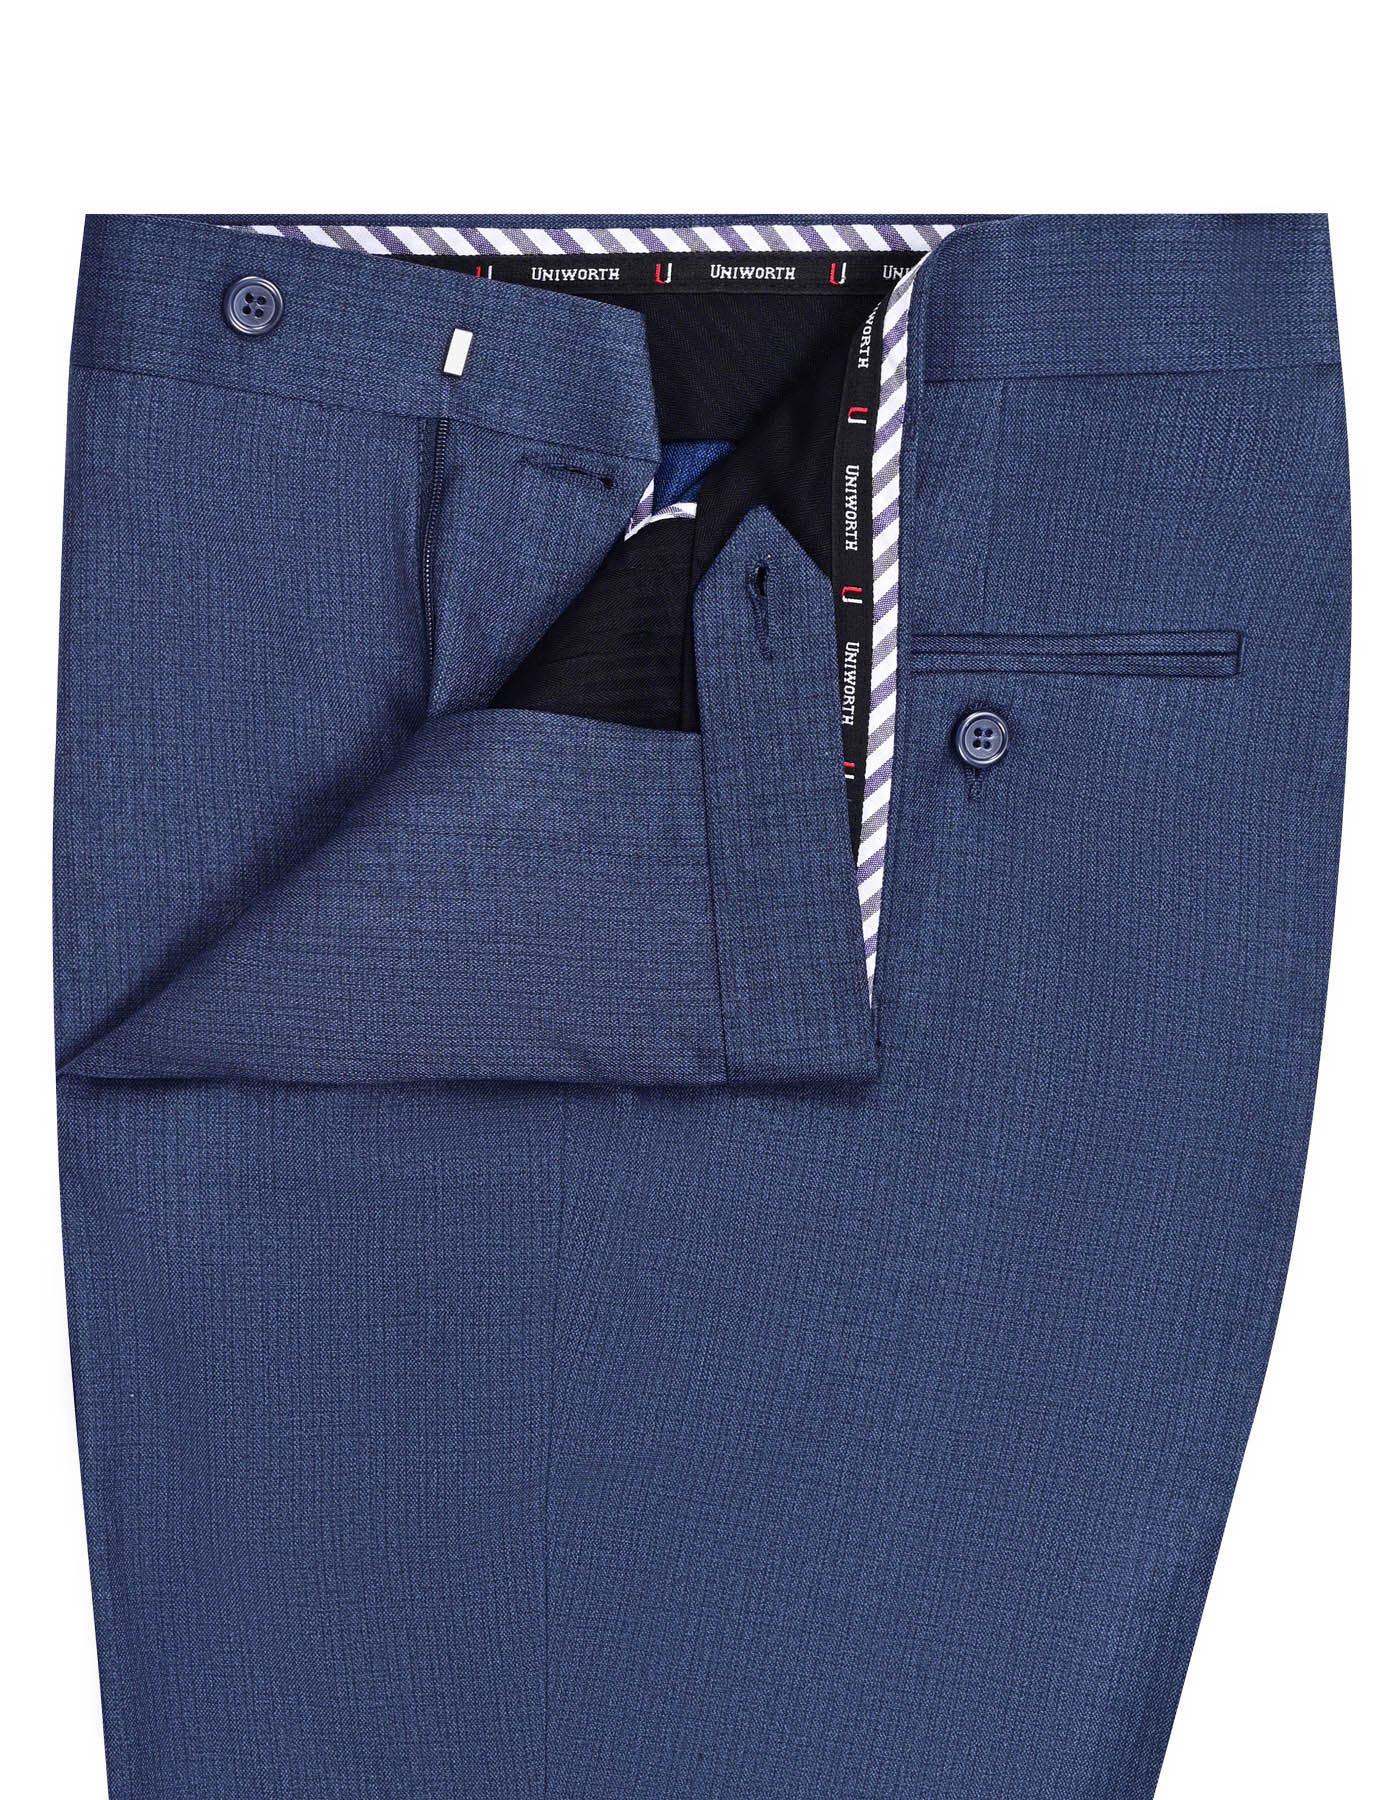 Formal Trouser Blue 30 FT378C Uniworth TF378